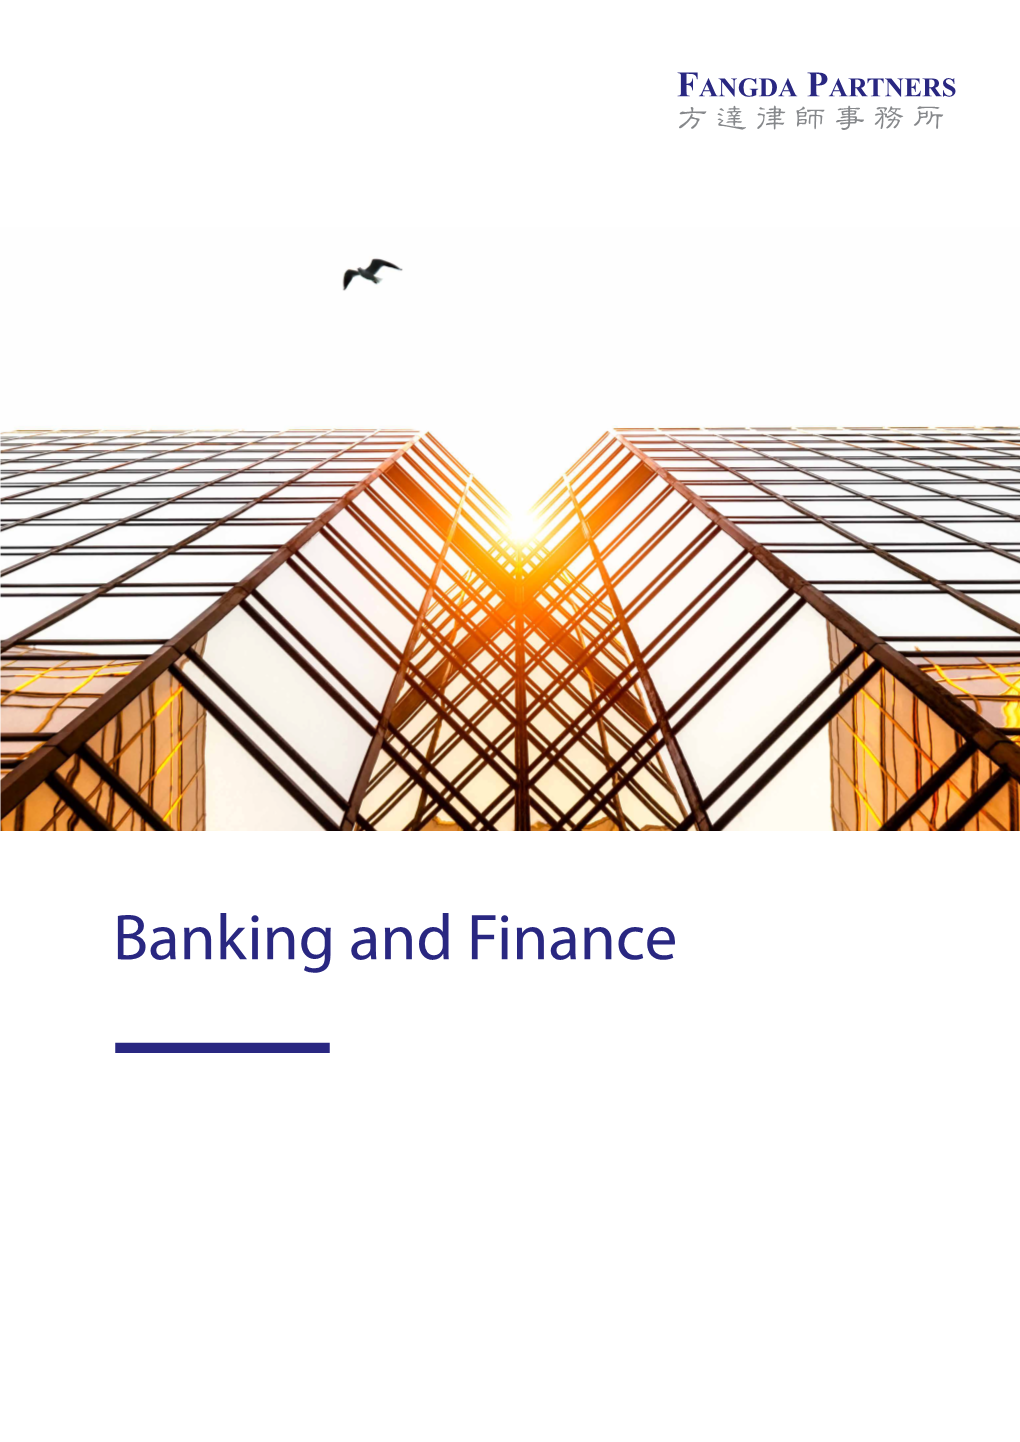 Banking Brochure-EN-0610